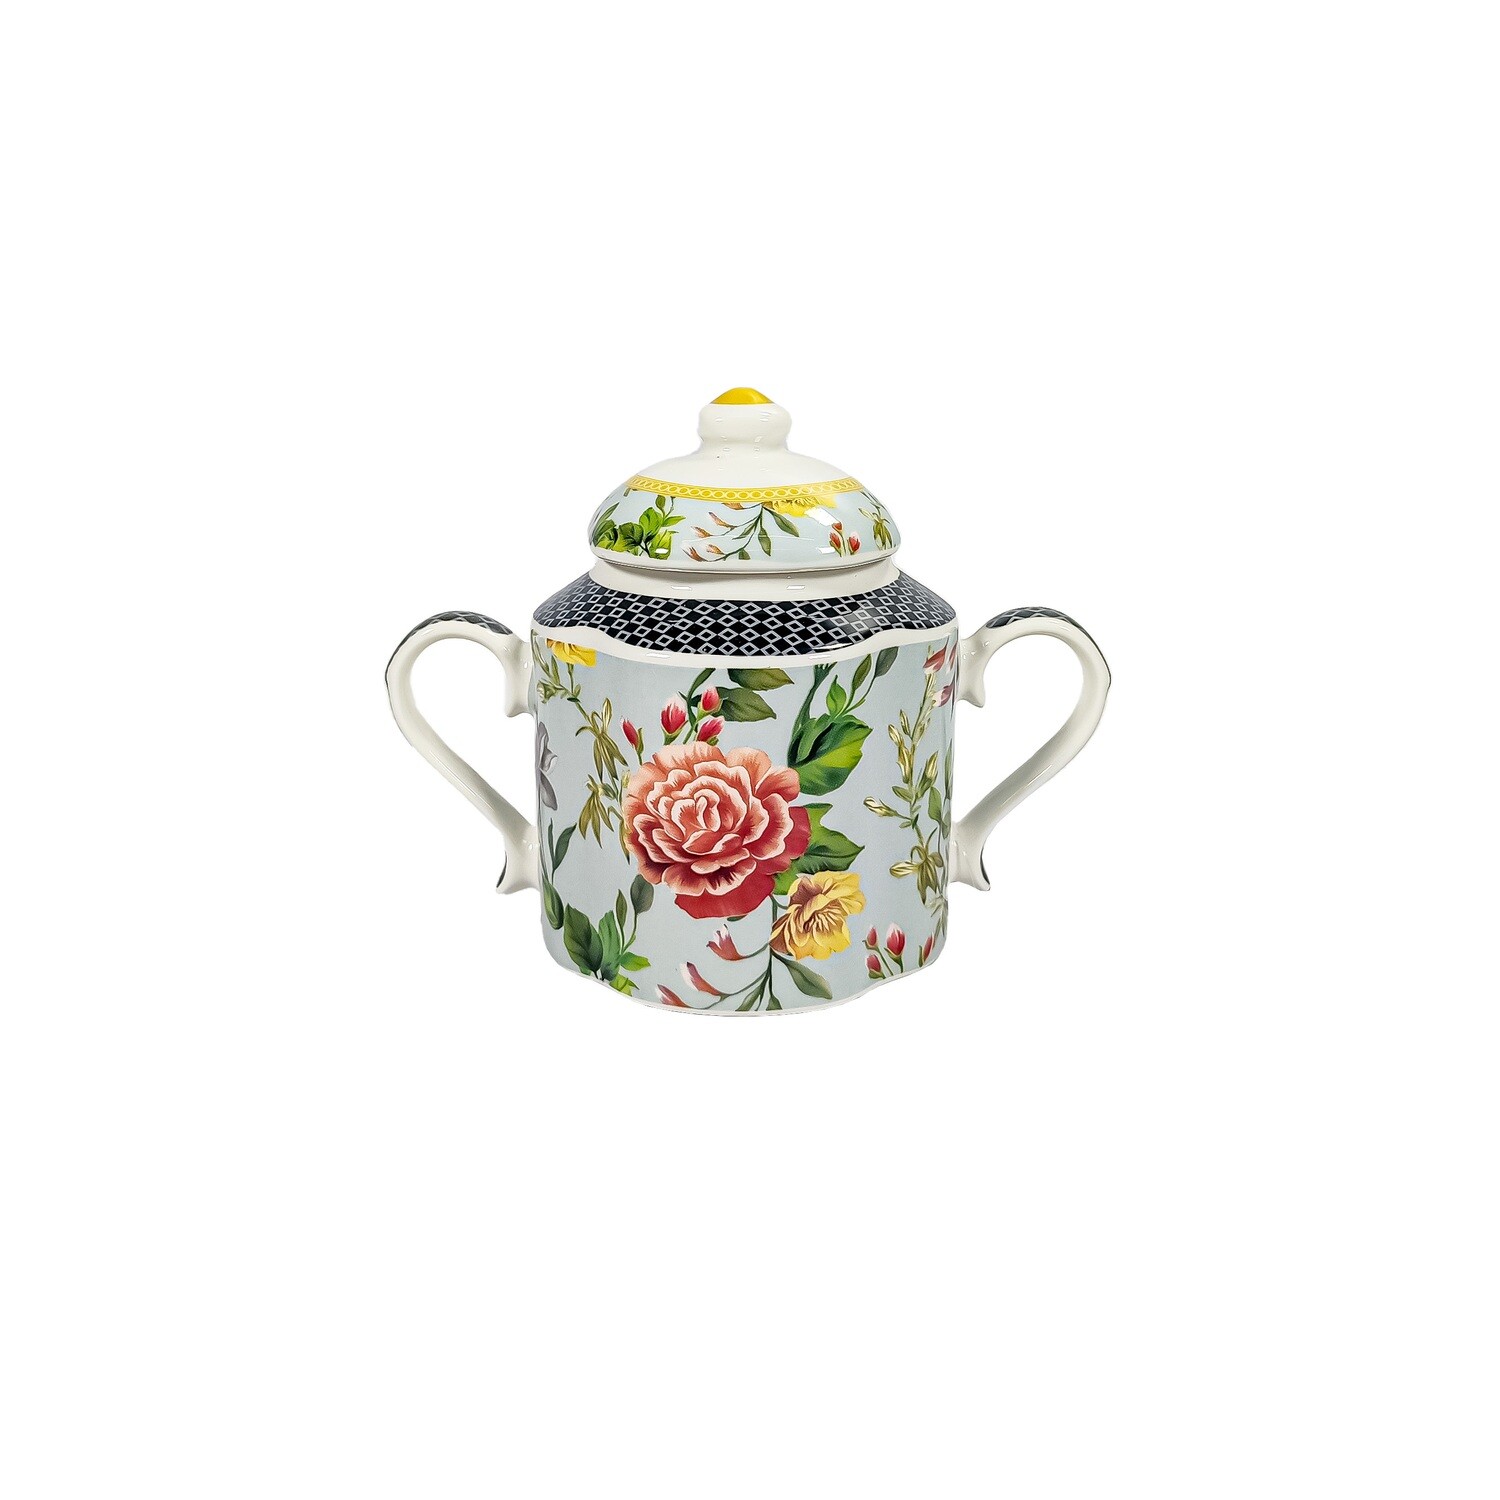 JENNA CLIFFORD - Botanica Rose Sugar Pot